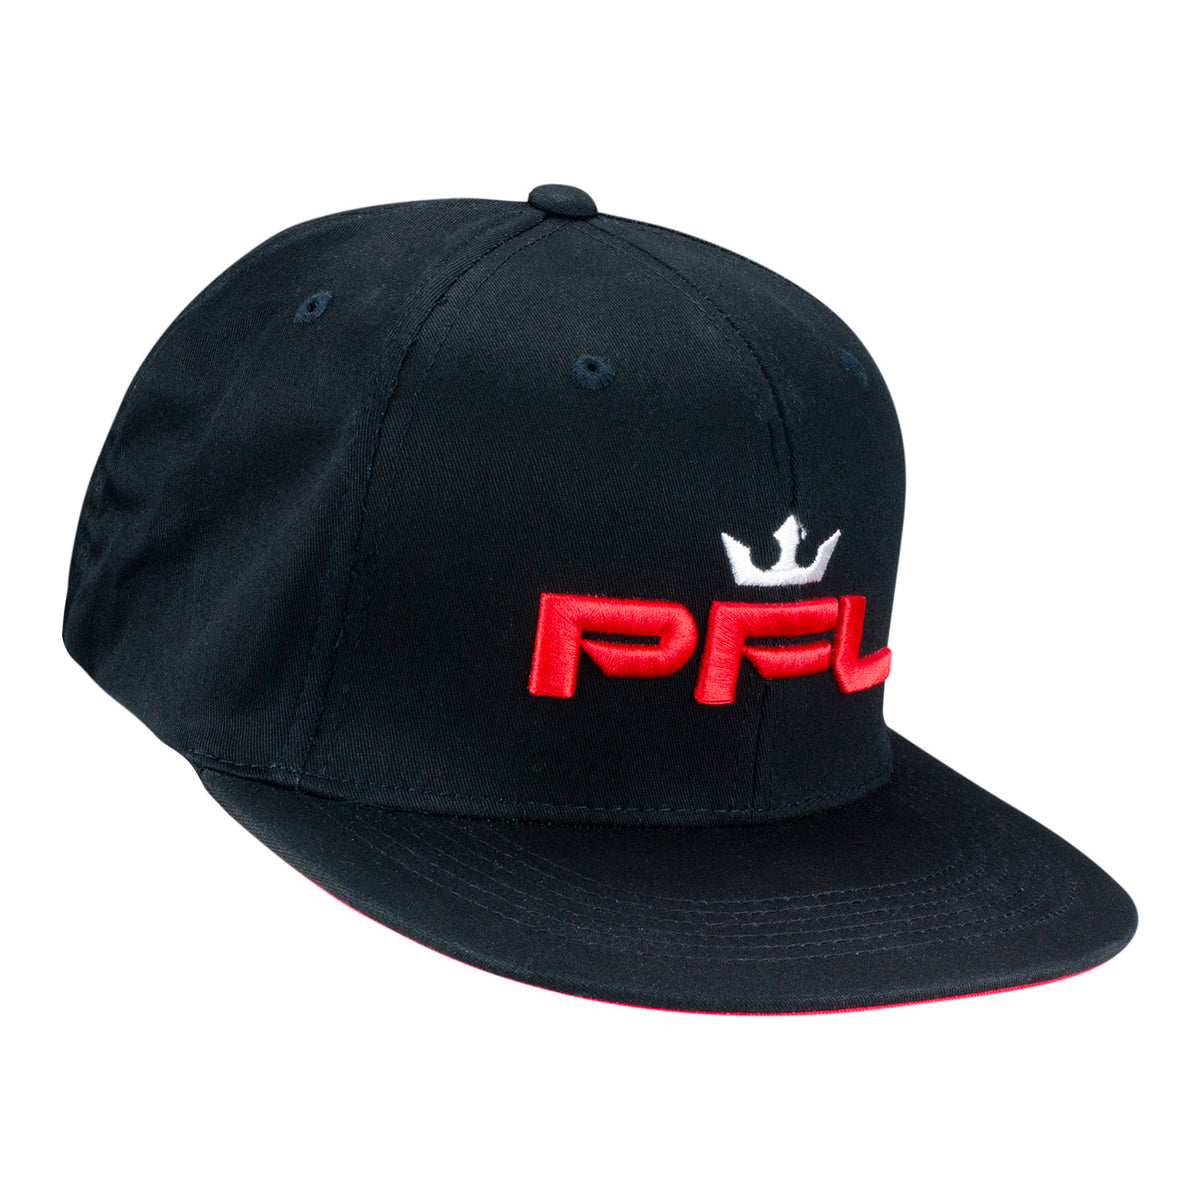 PFL Black Flexfit Hat